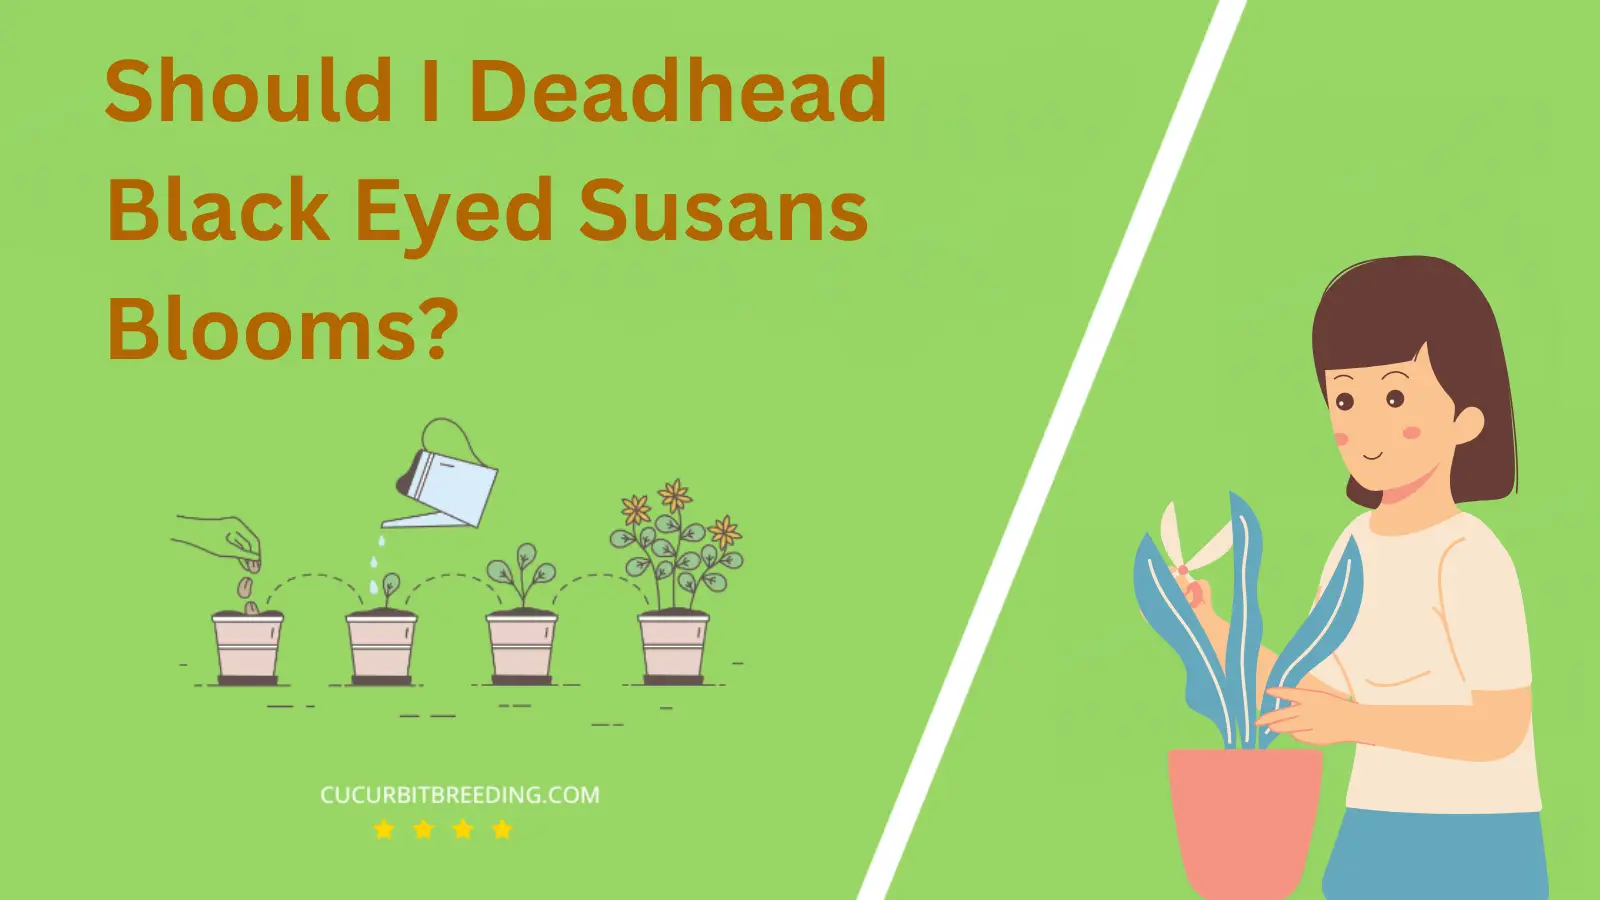 Should I Deadhead Black Eyed Susans Blooms?